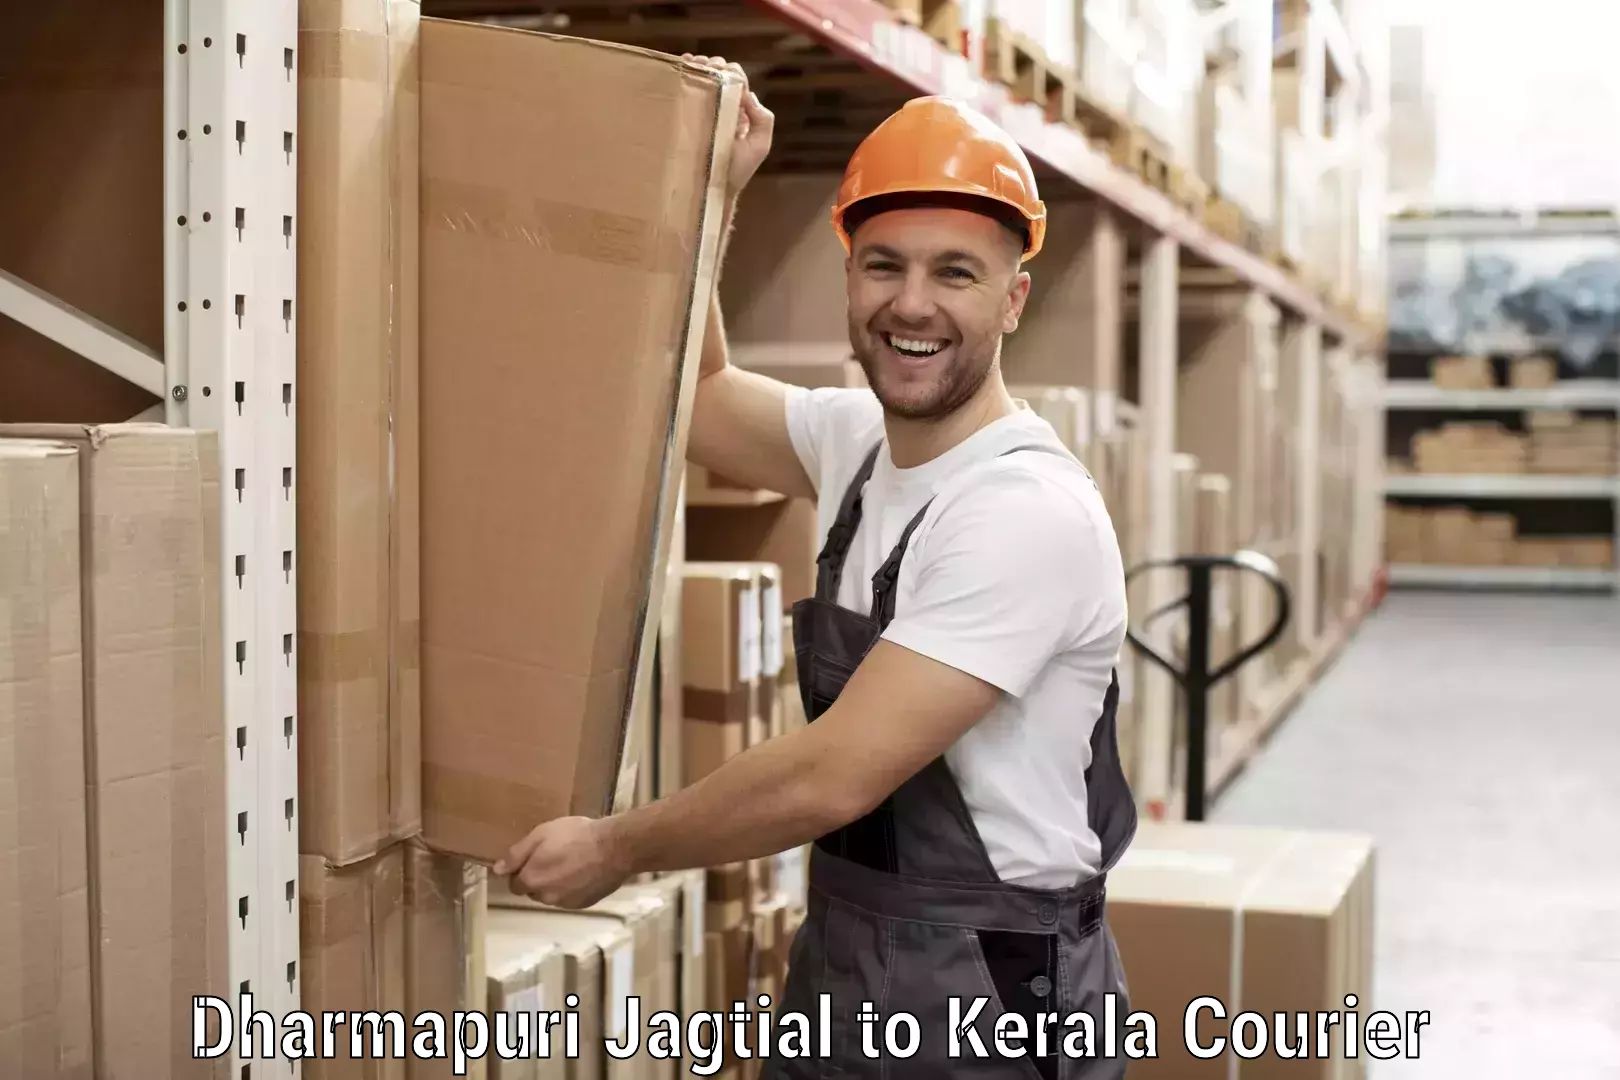 Courier service partnerships Dharmapuri Jagtial to Mundakayam